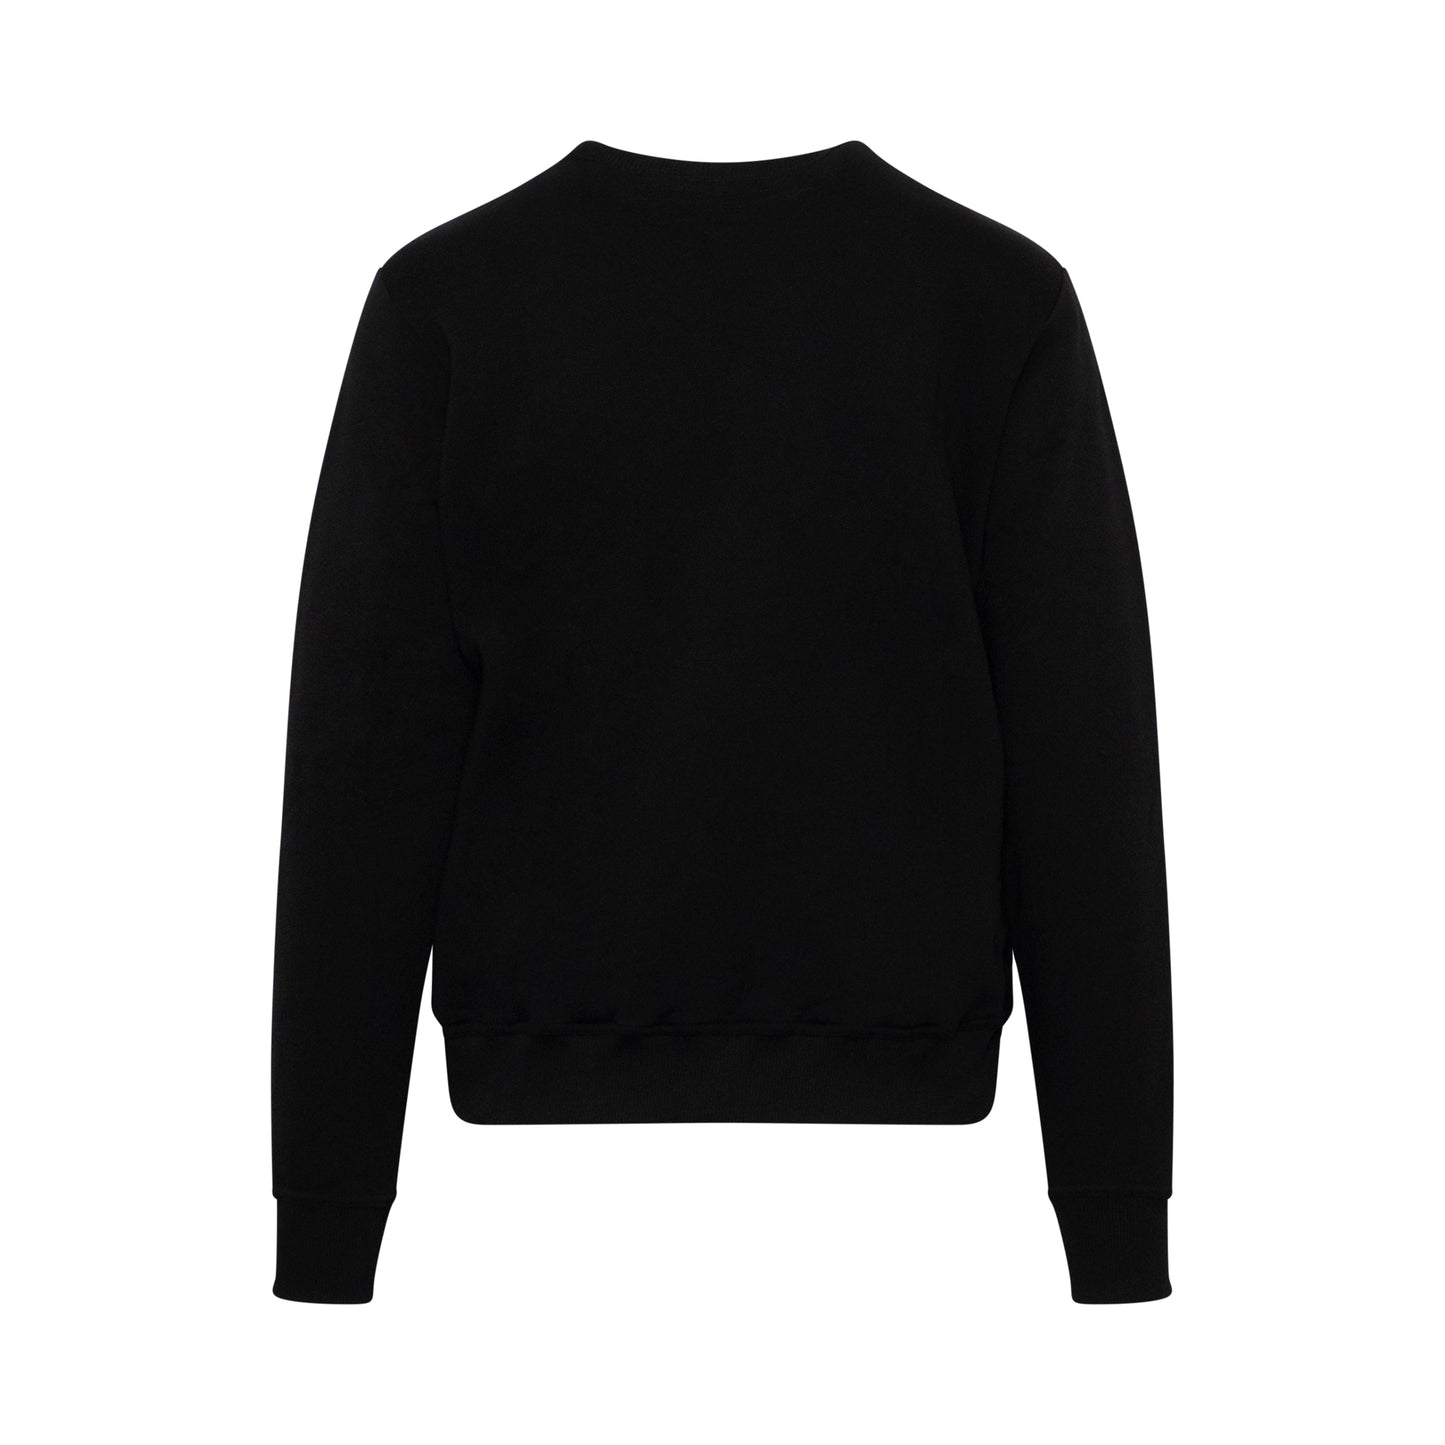 Creed 1 Sweatshirt in Black